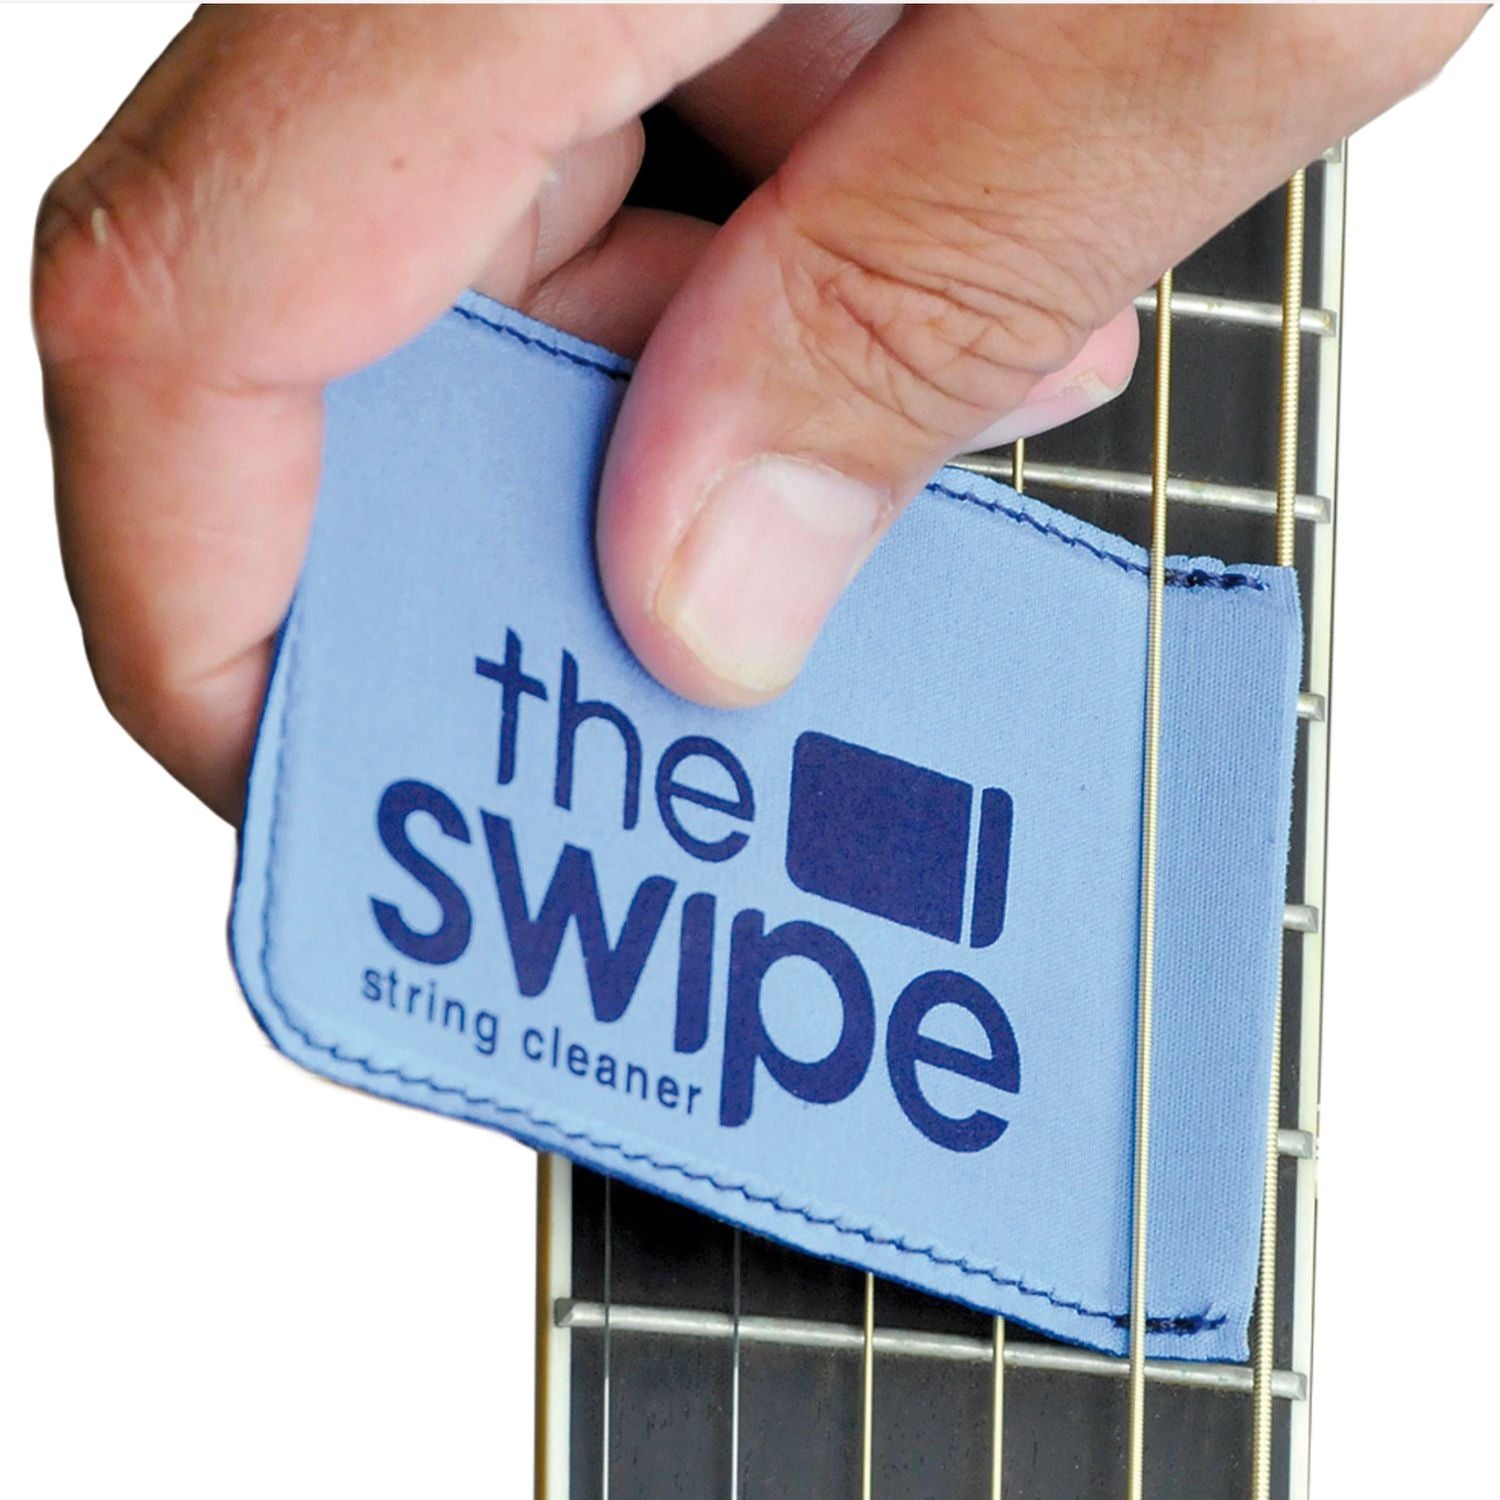 The Swipe String Cleaner